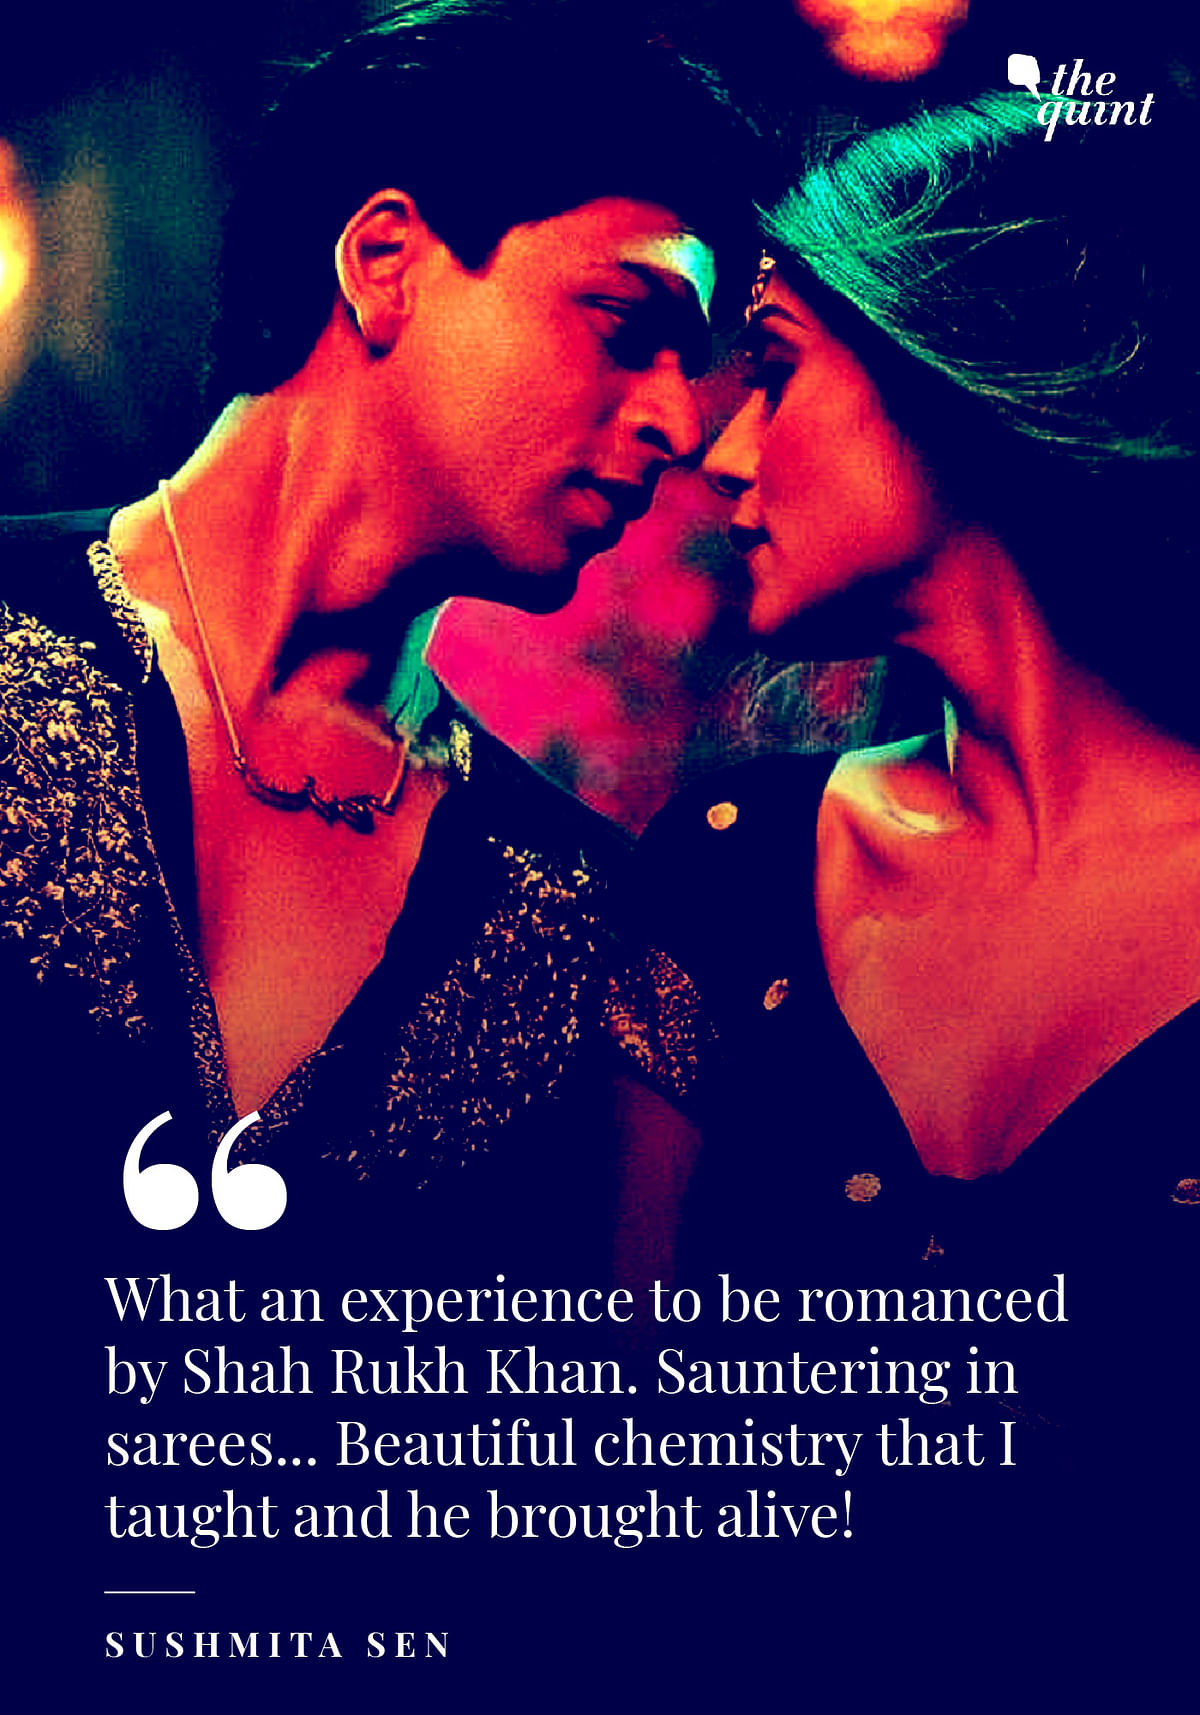 Kajol, Kareena, Madhuri and more on SRK.